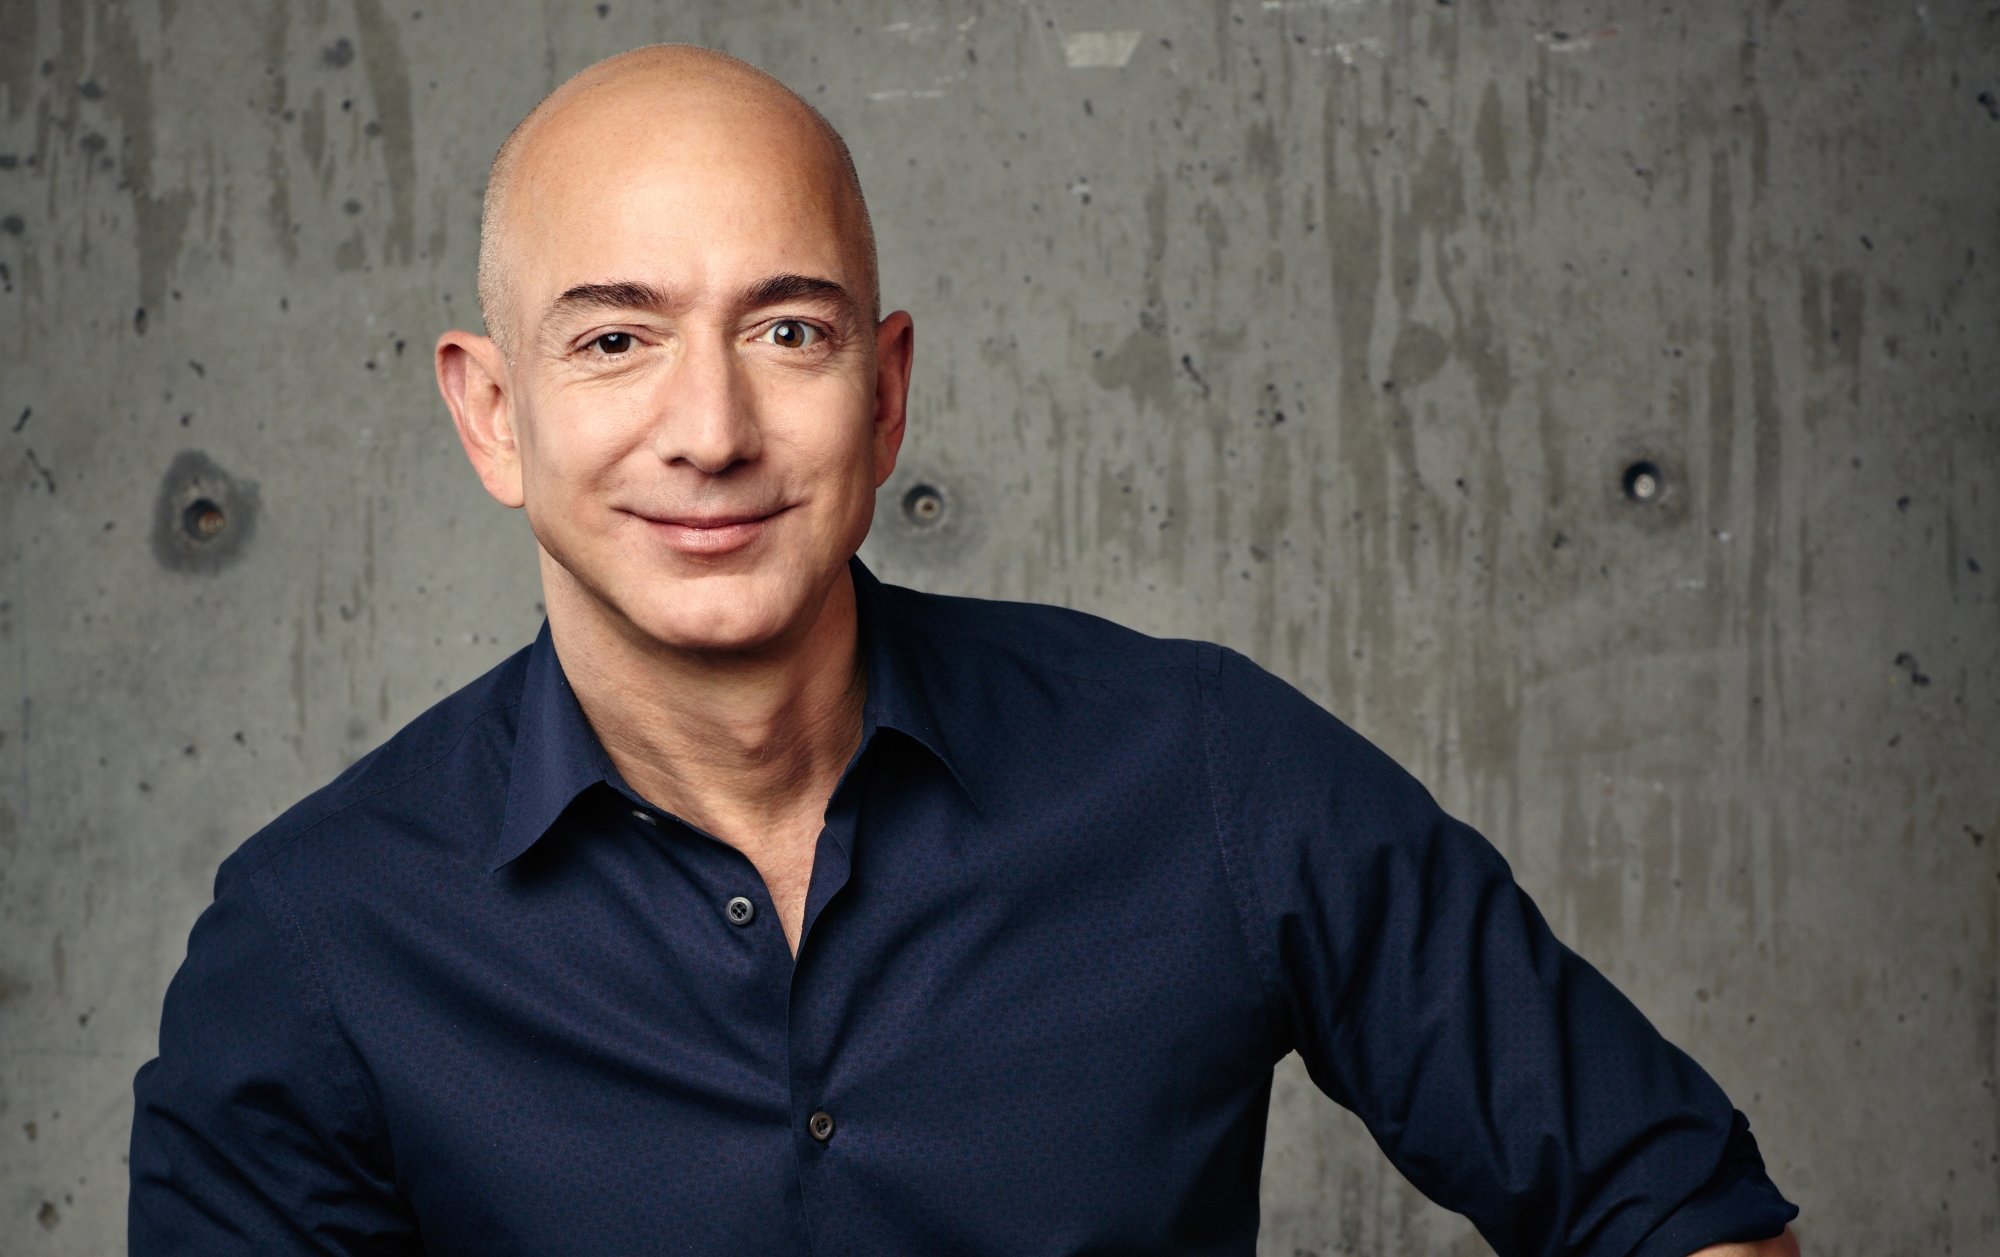 Jeff Bezos on Alexa: 